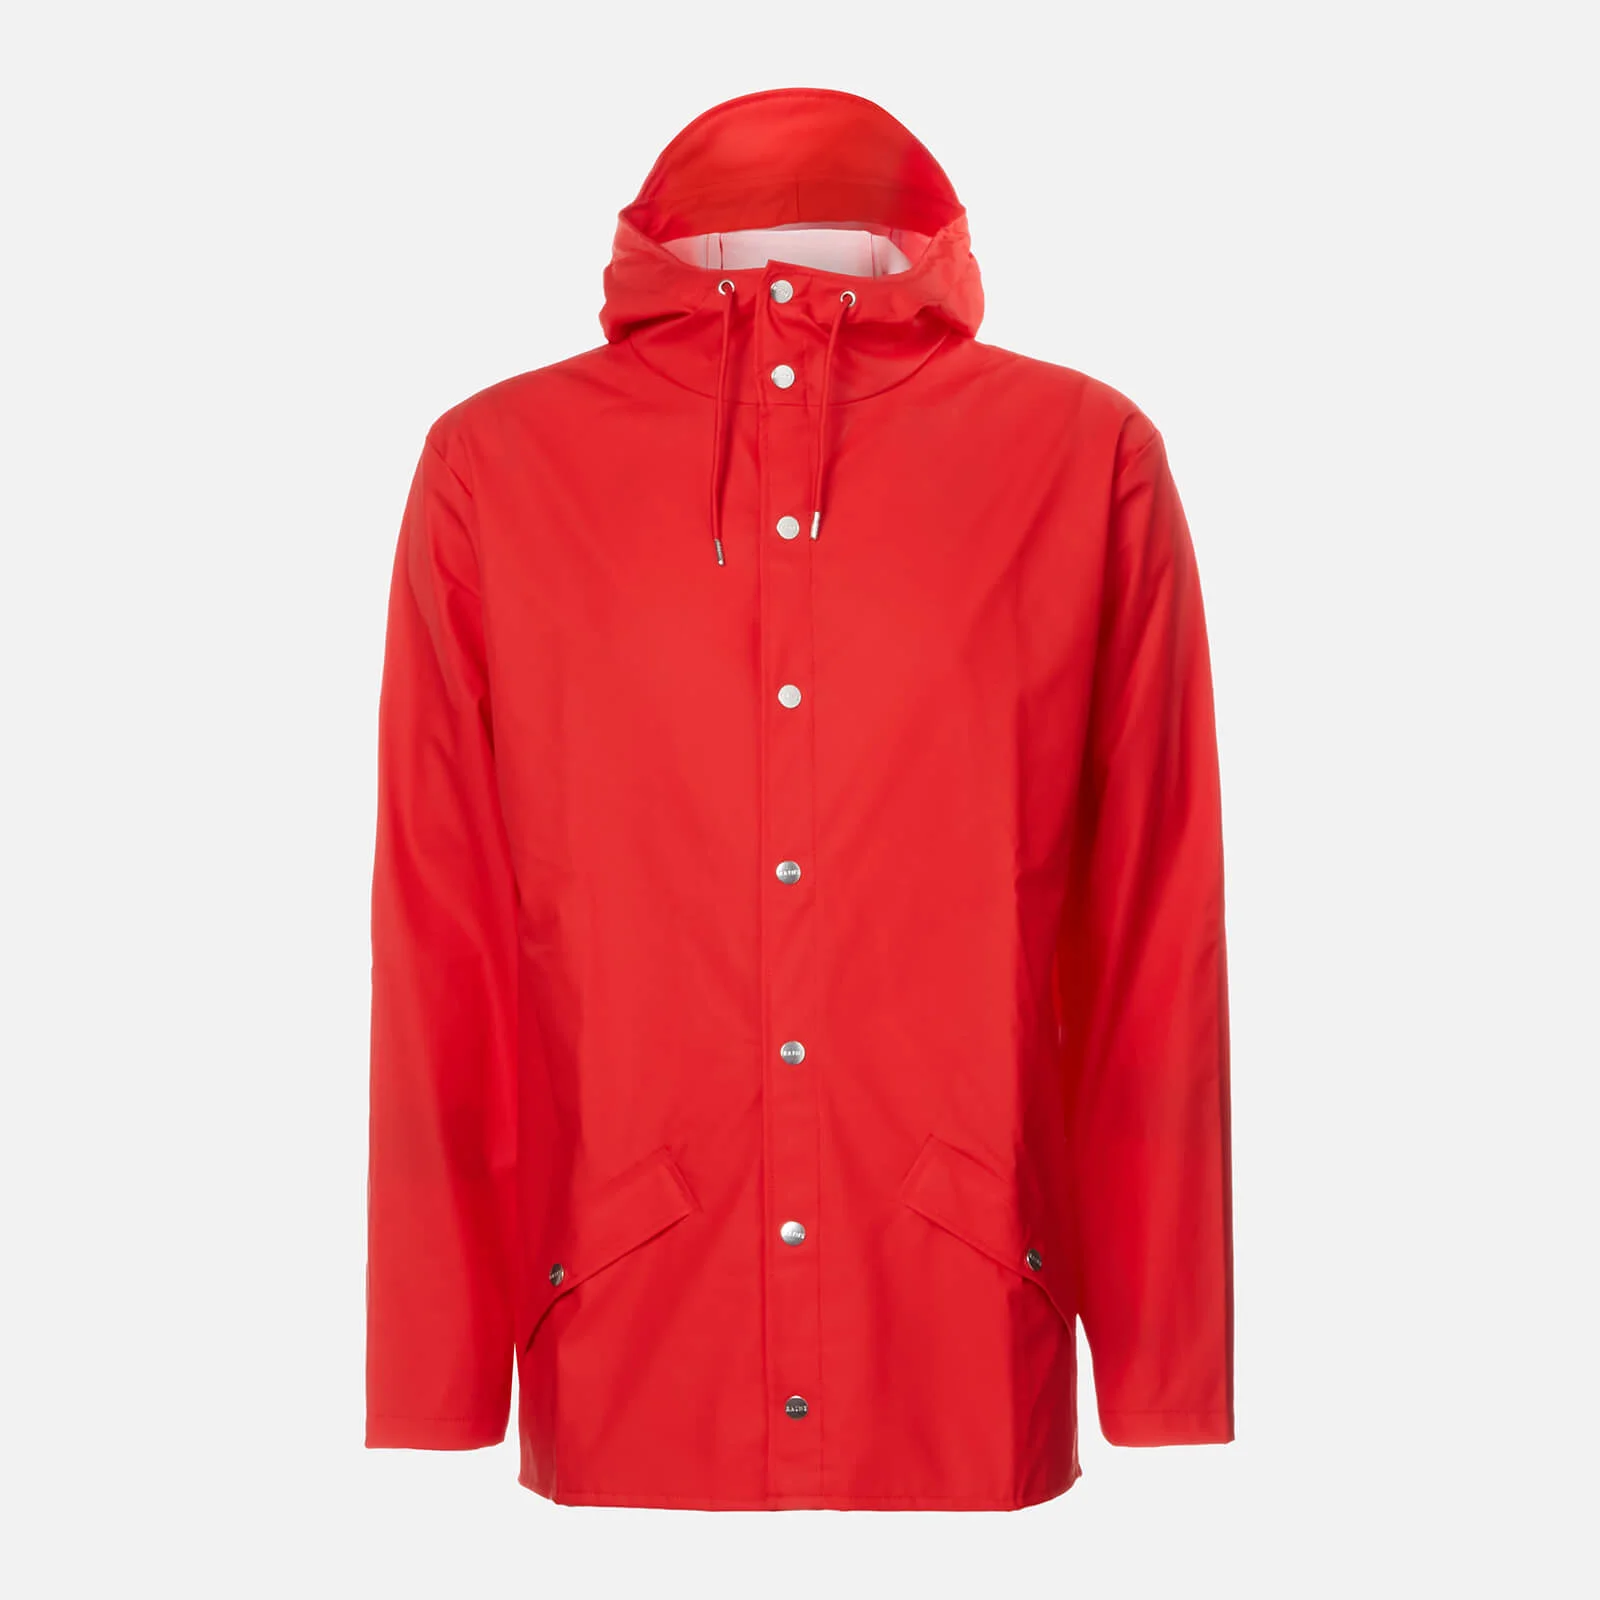 Rains Jacket - Red Image 1